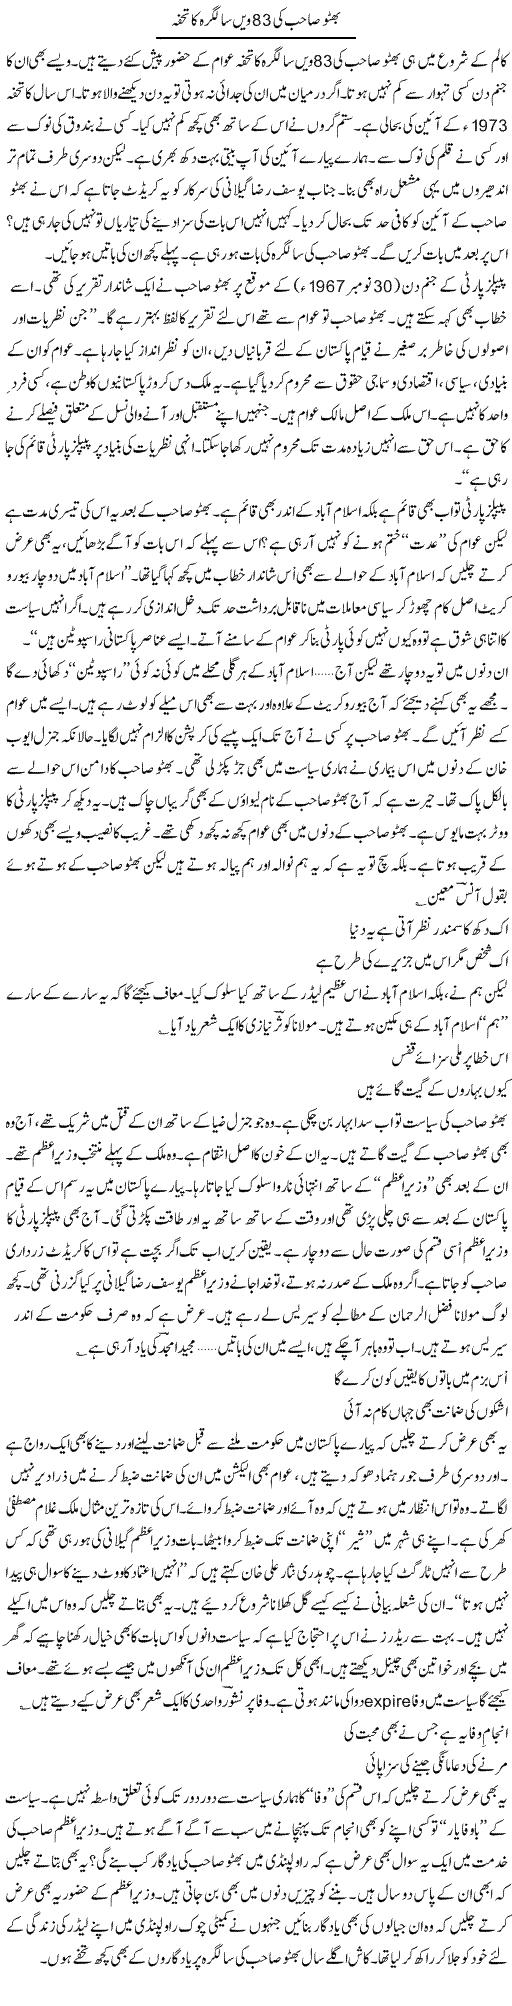 Birthday of Bhutto Express Column Ijaz Hafeez 6 January 2011